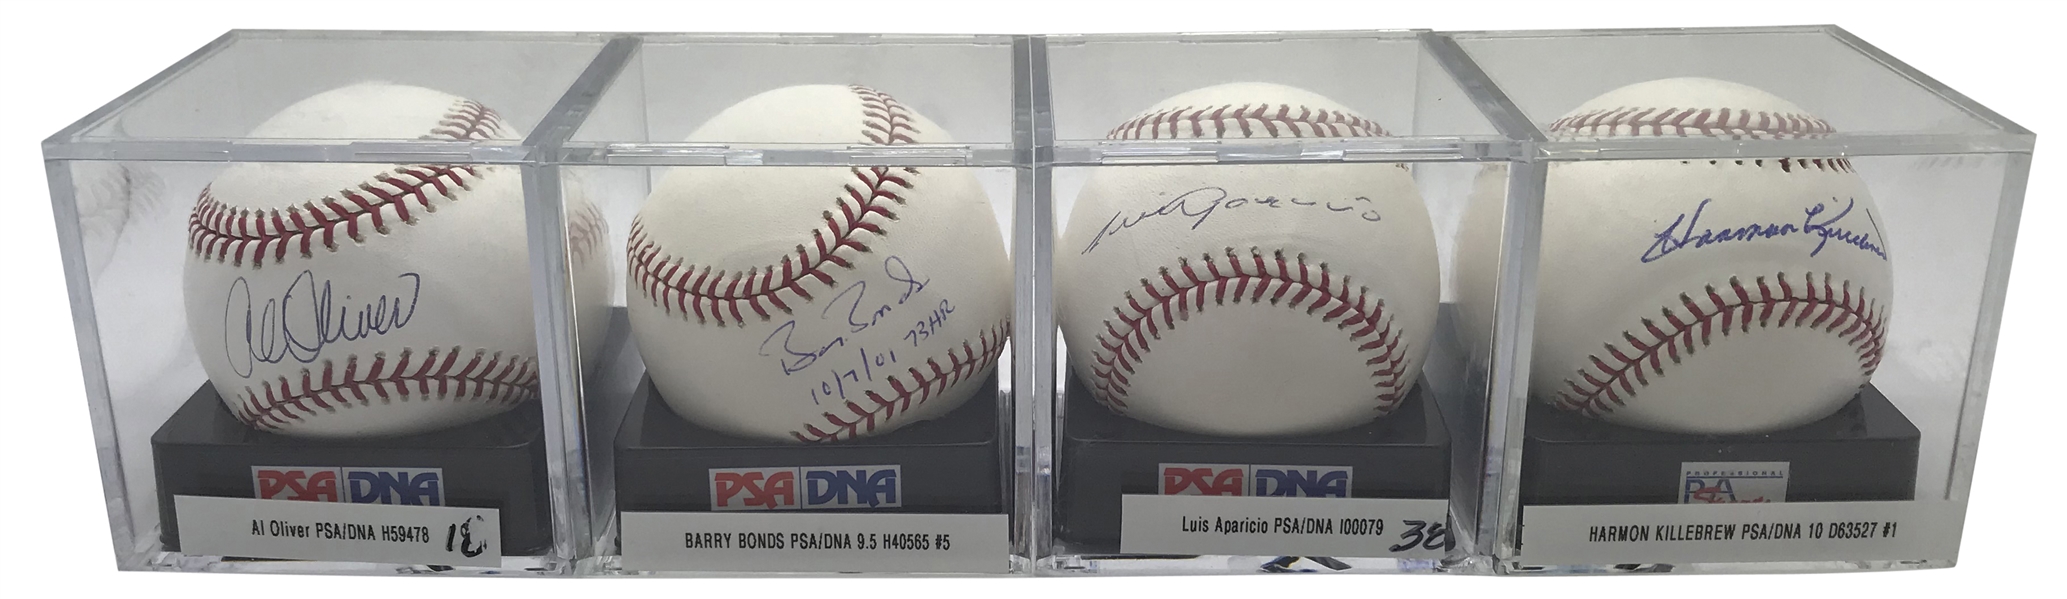 Lot of Seven (7) Single Signed MLB Stars Baseballs w/ Bonds, Killebrew & Others! (PSA/DNA)